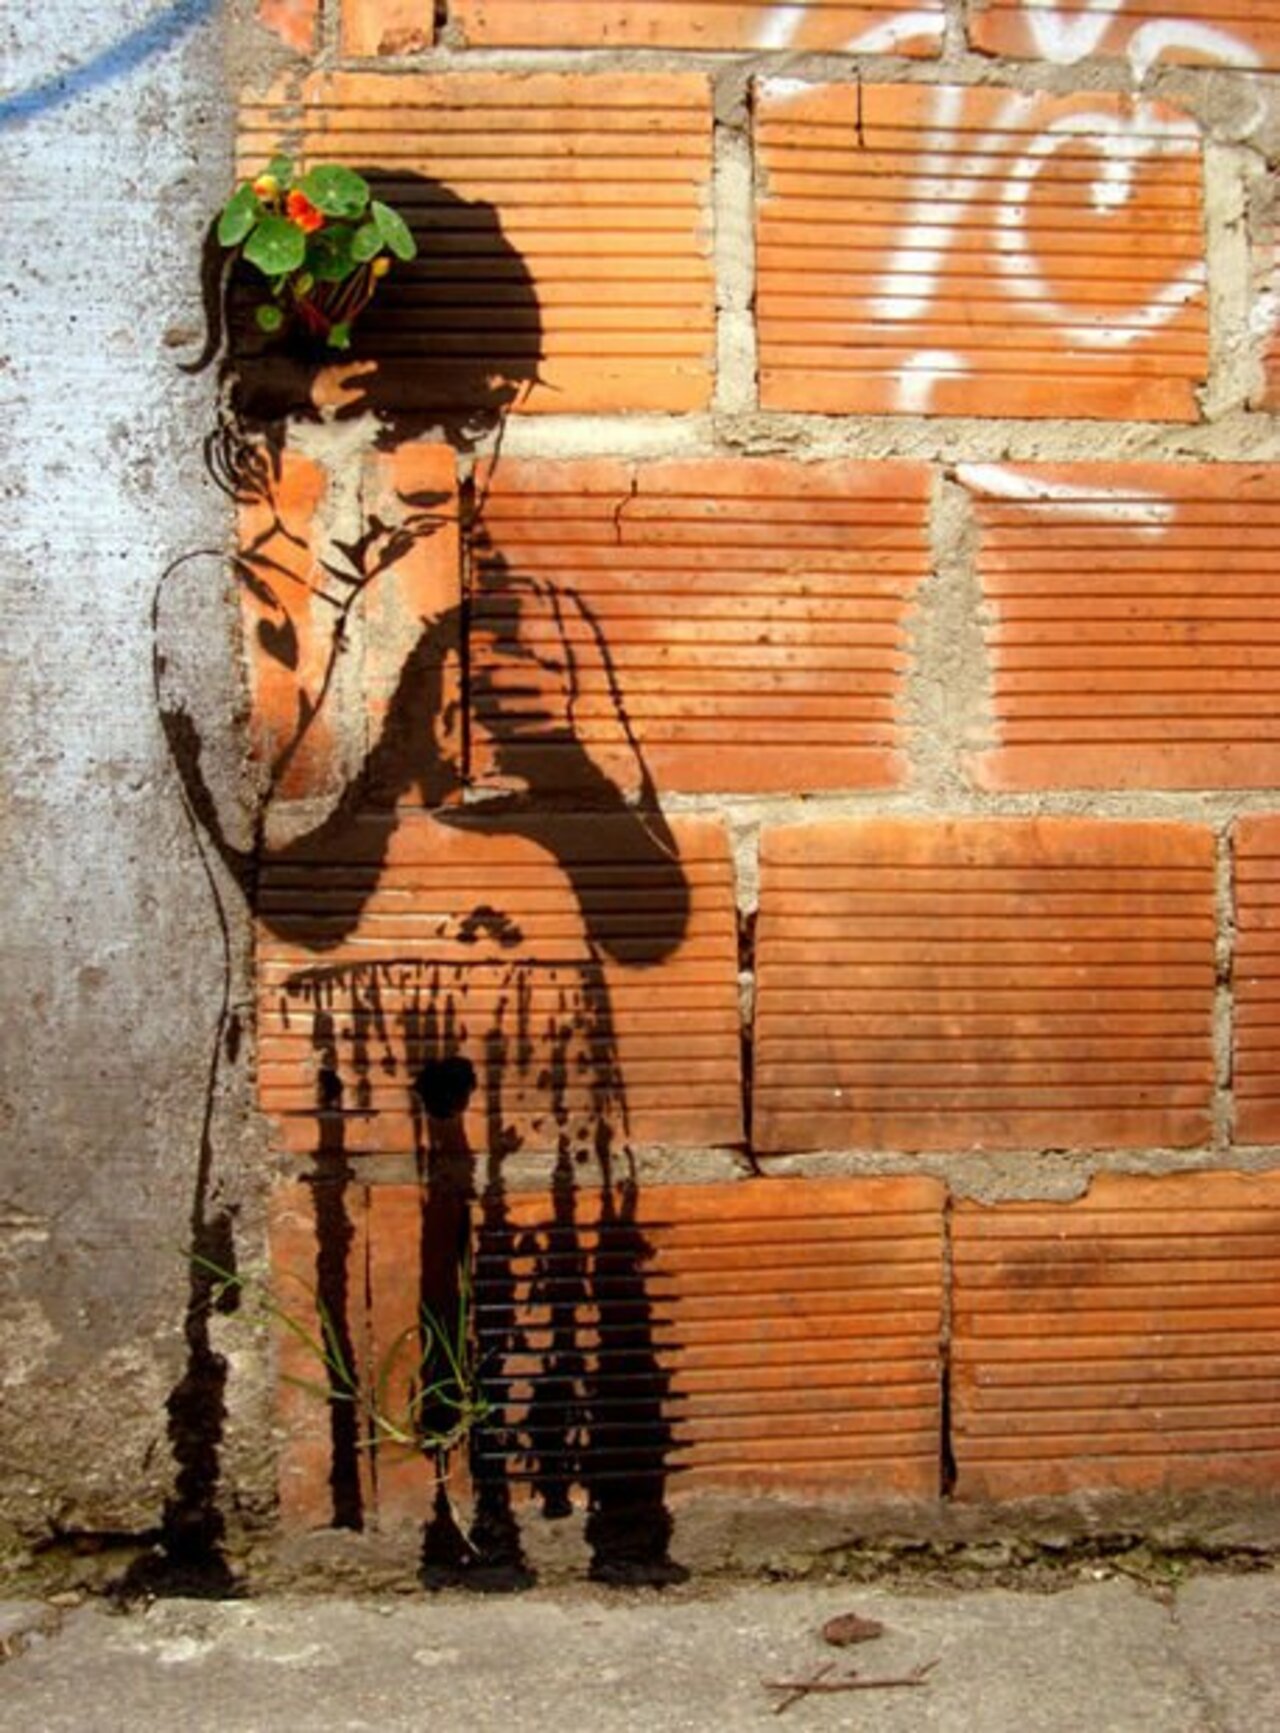 New street art by Stink Colombia#streetart #mural #graffiti #art https://t.co/0XqBpv856I